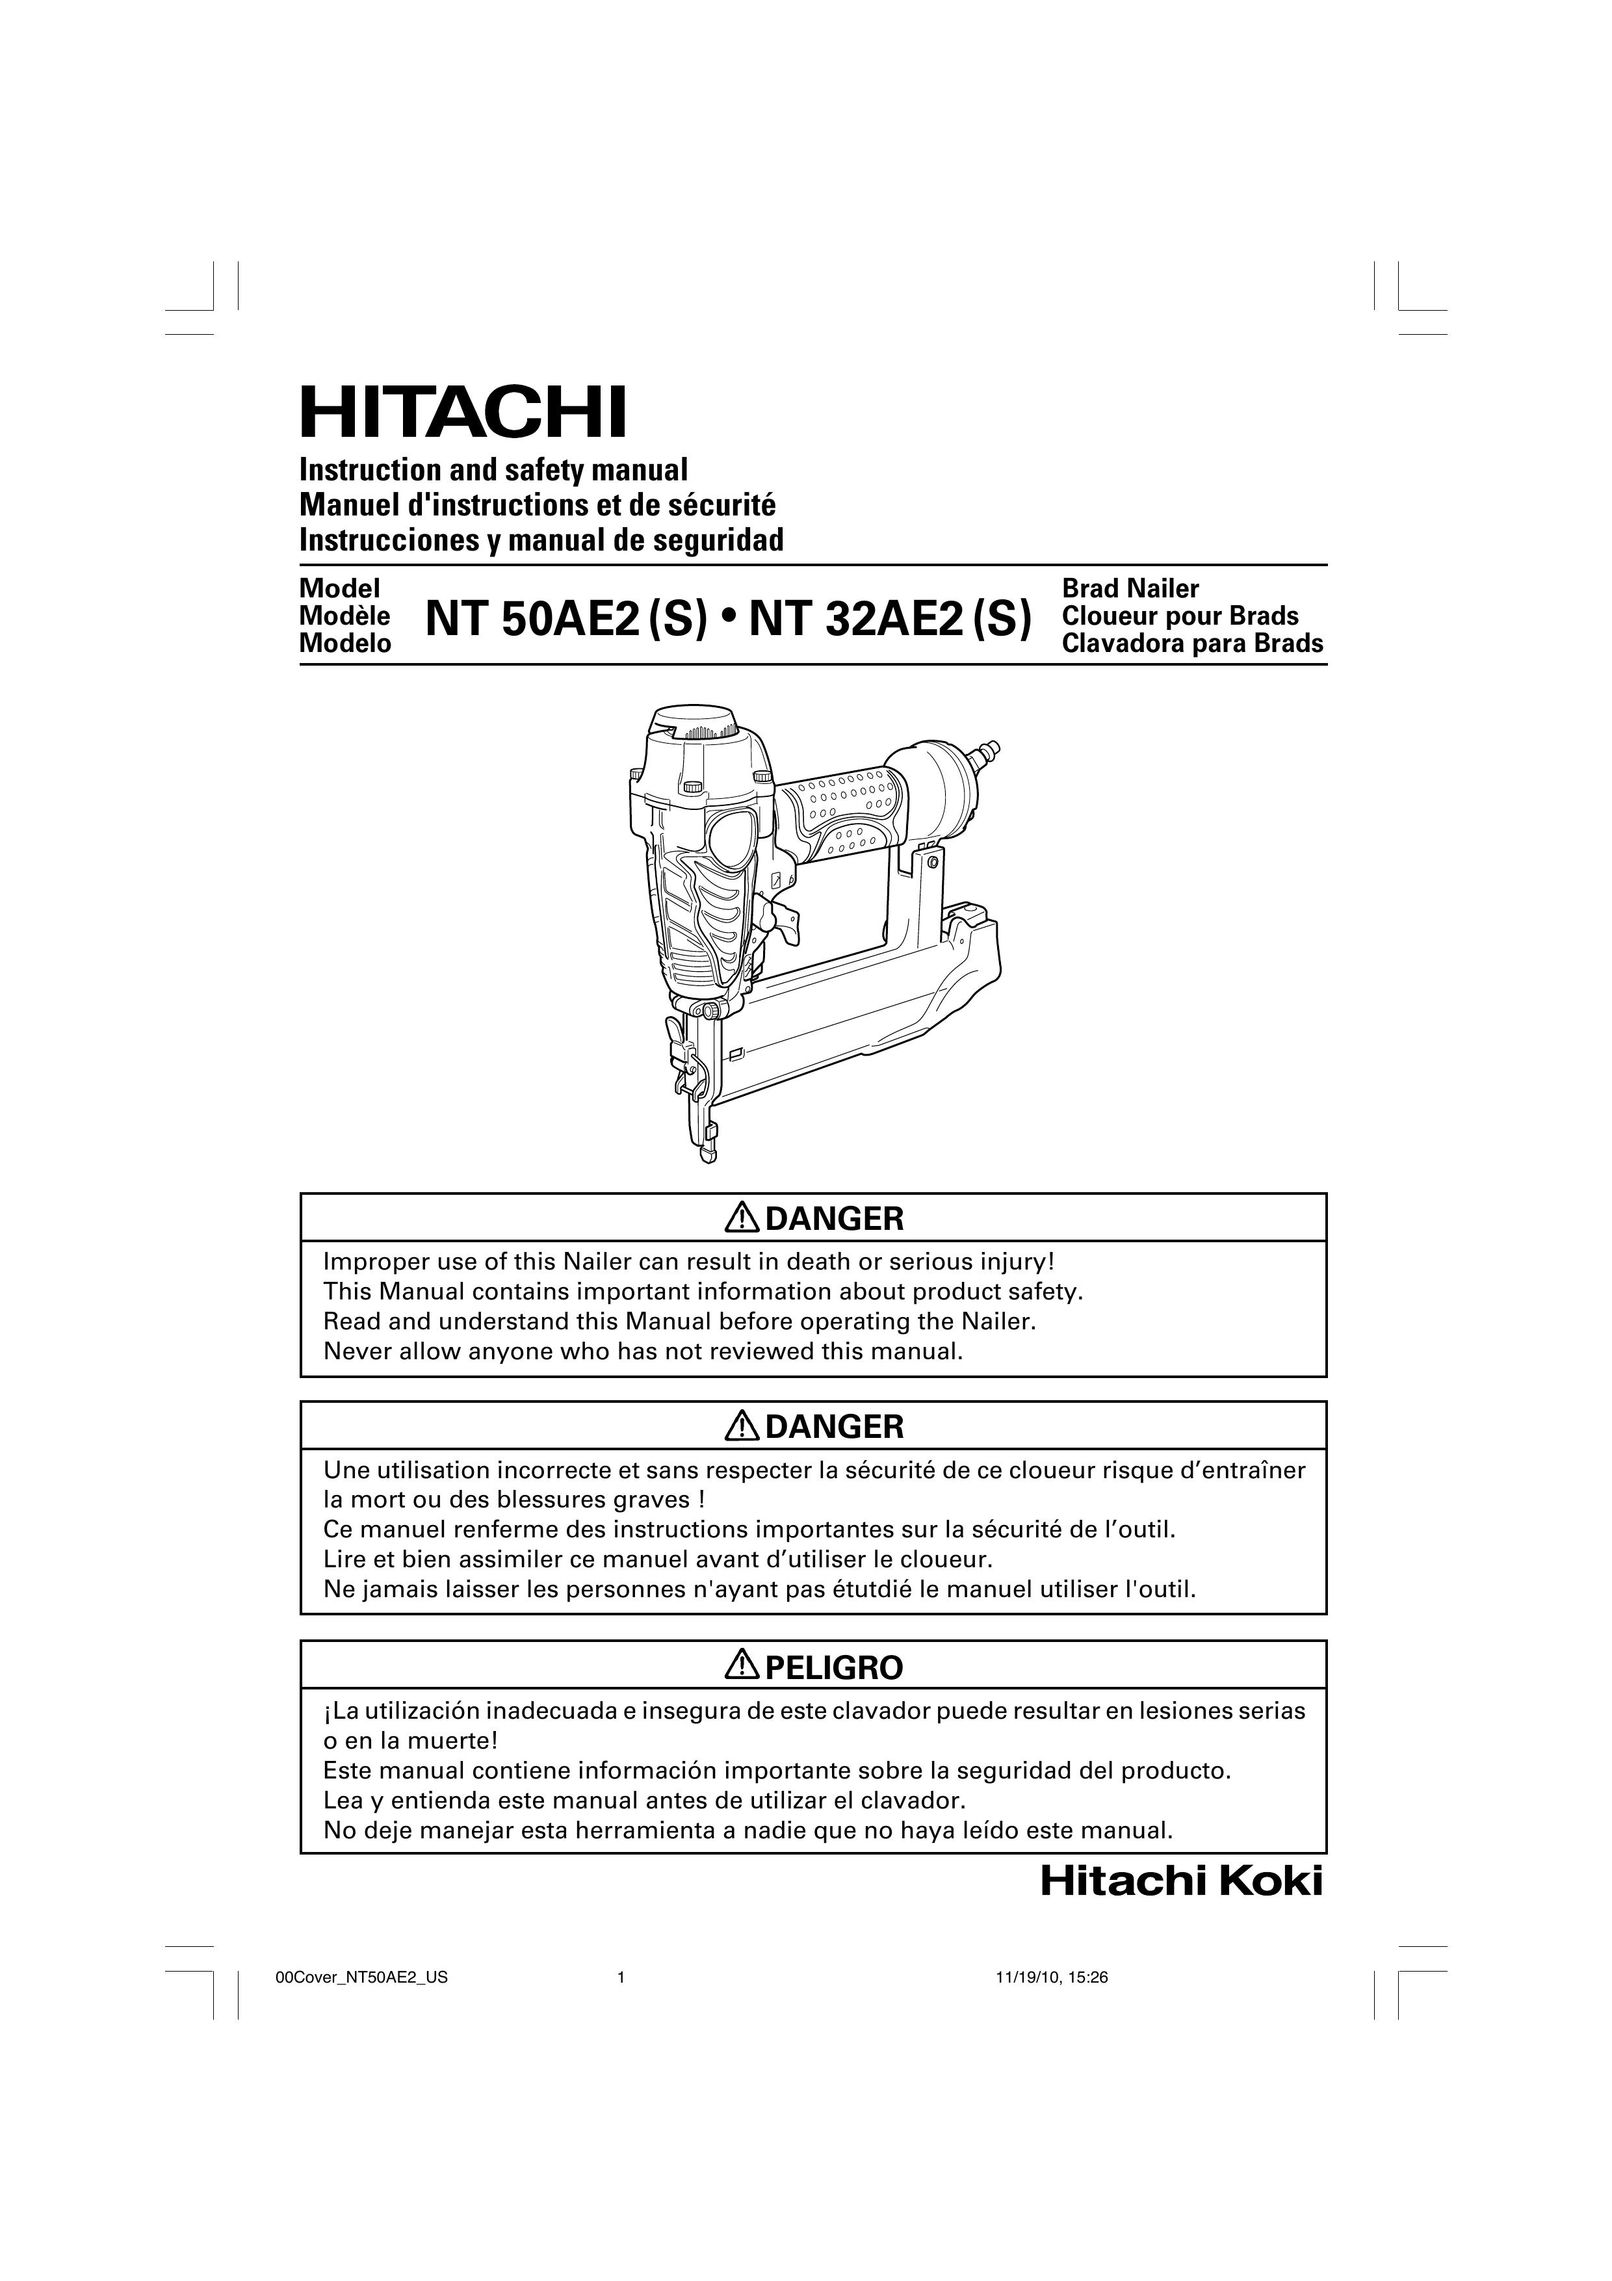 Hitachi NT 32 AE2(S) Nail Gun User Manual